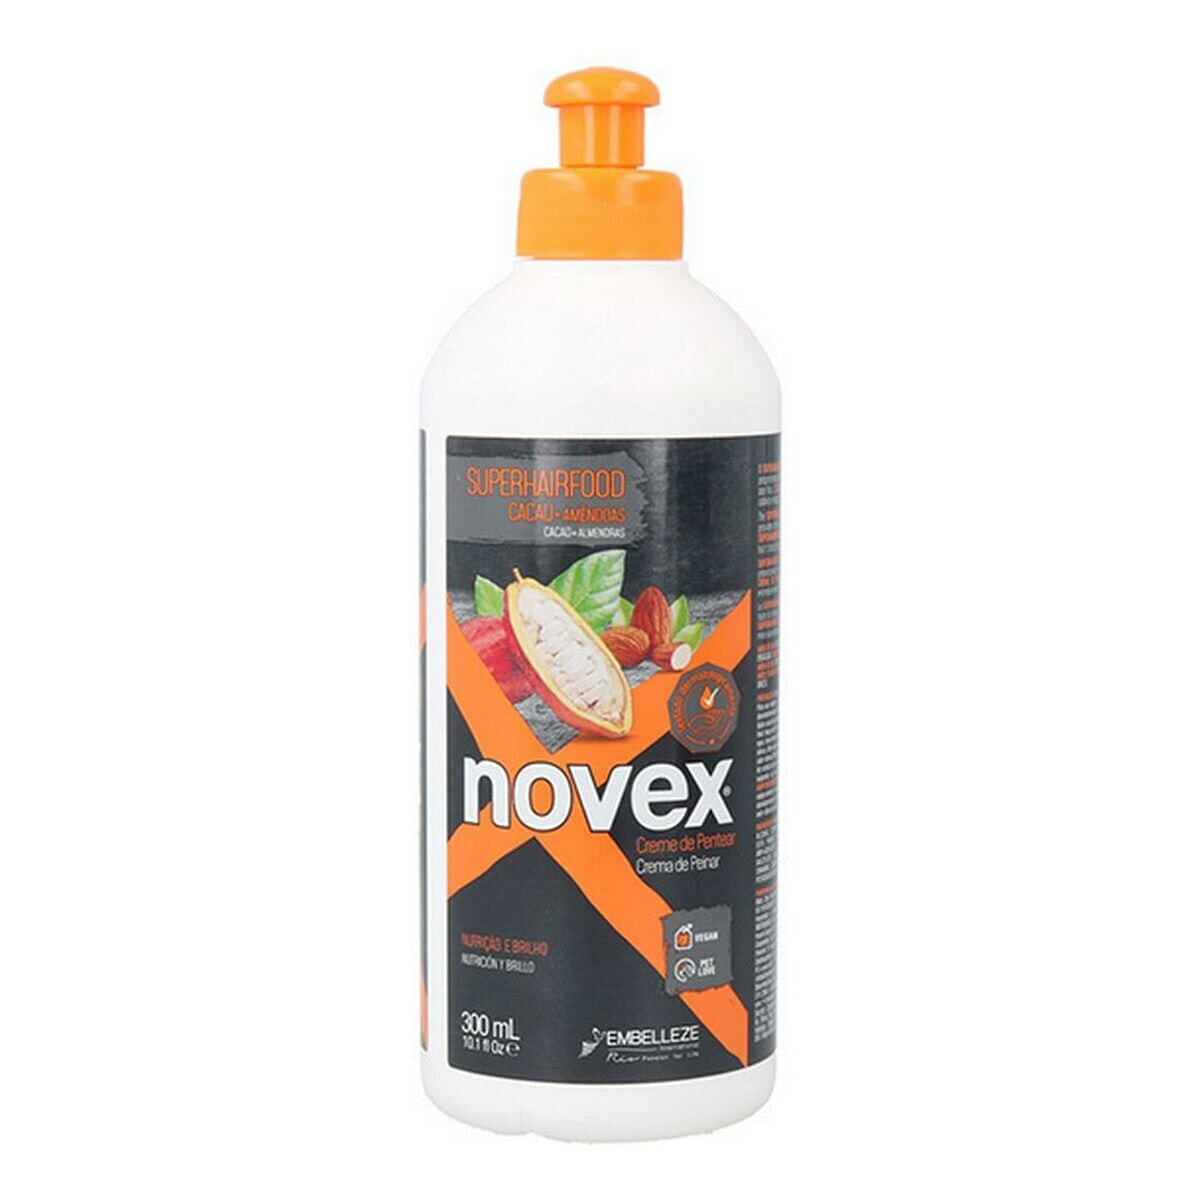 Кондиционер Superhairfood Novex 876120004880 (300 ml)